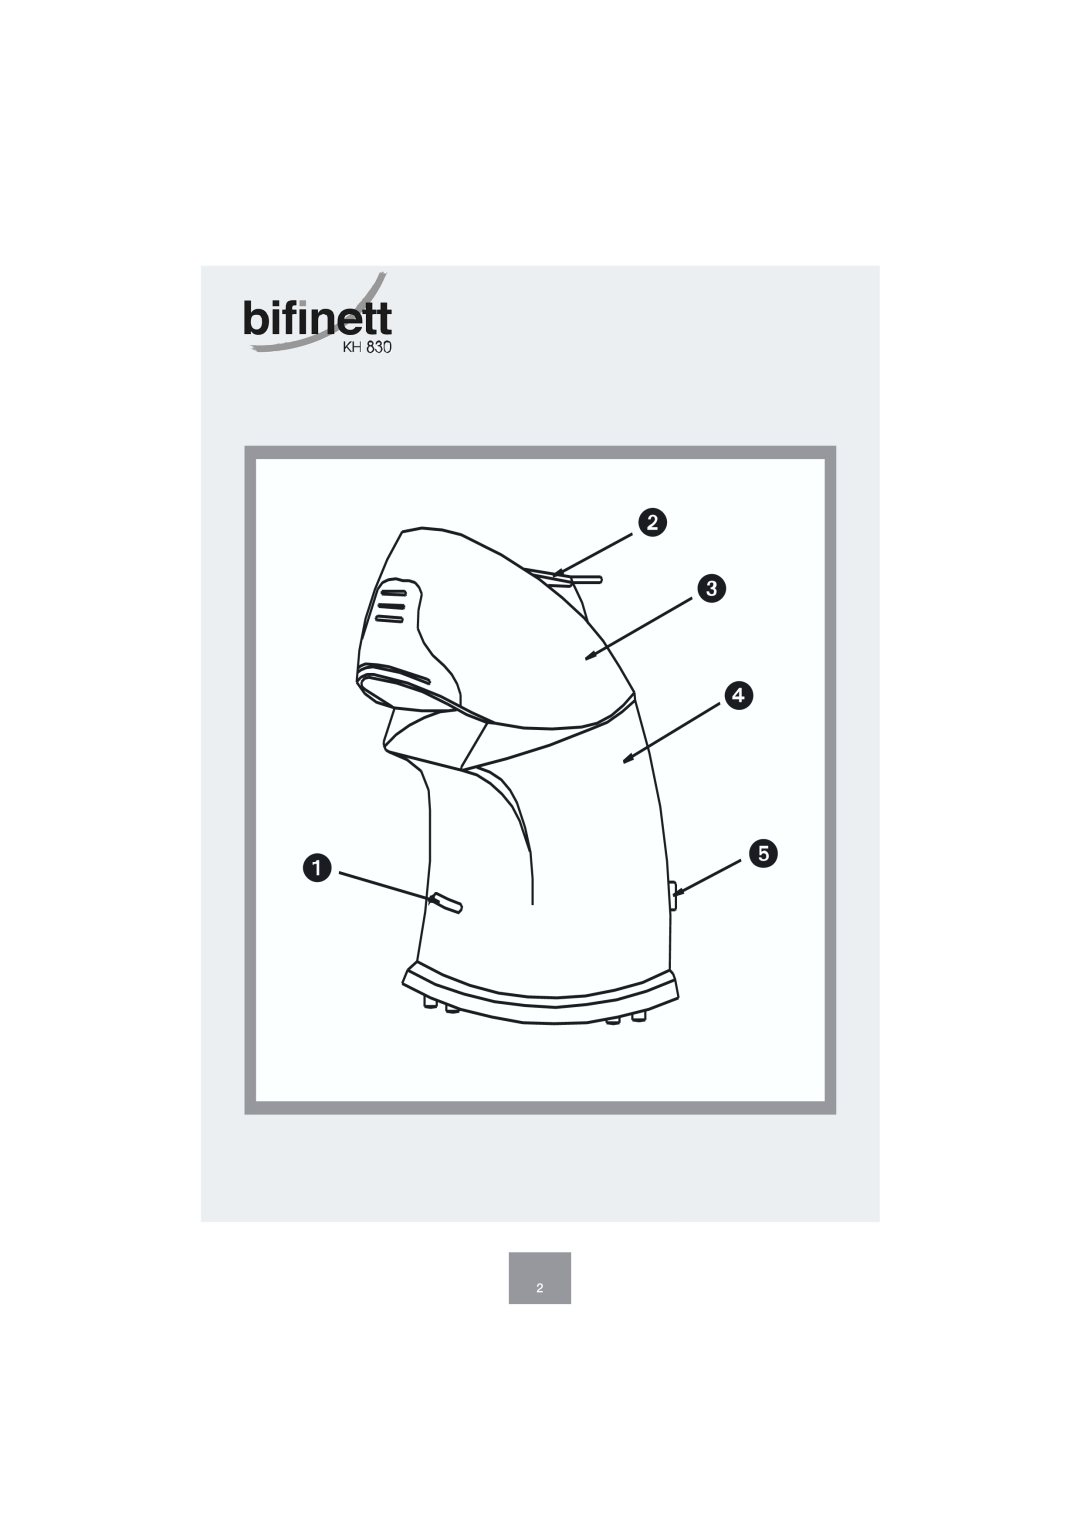 Bifinett KH 830 manual 